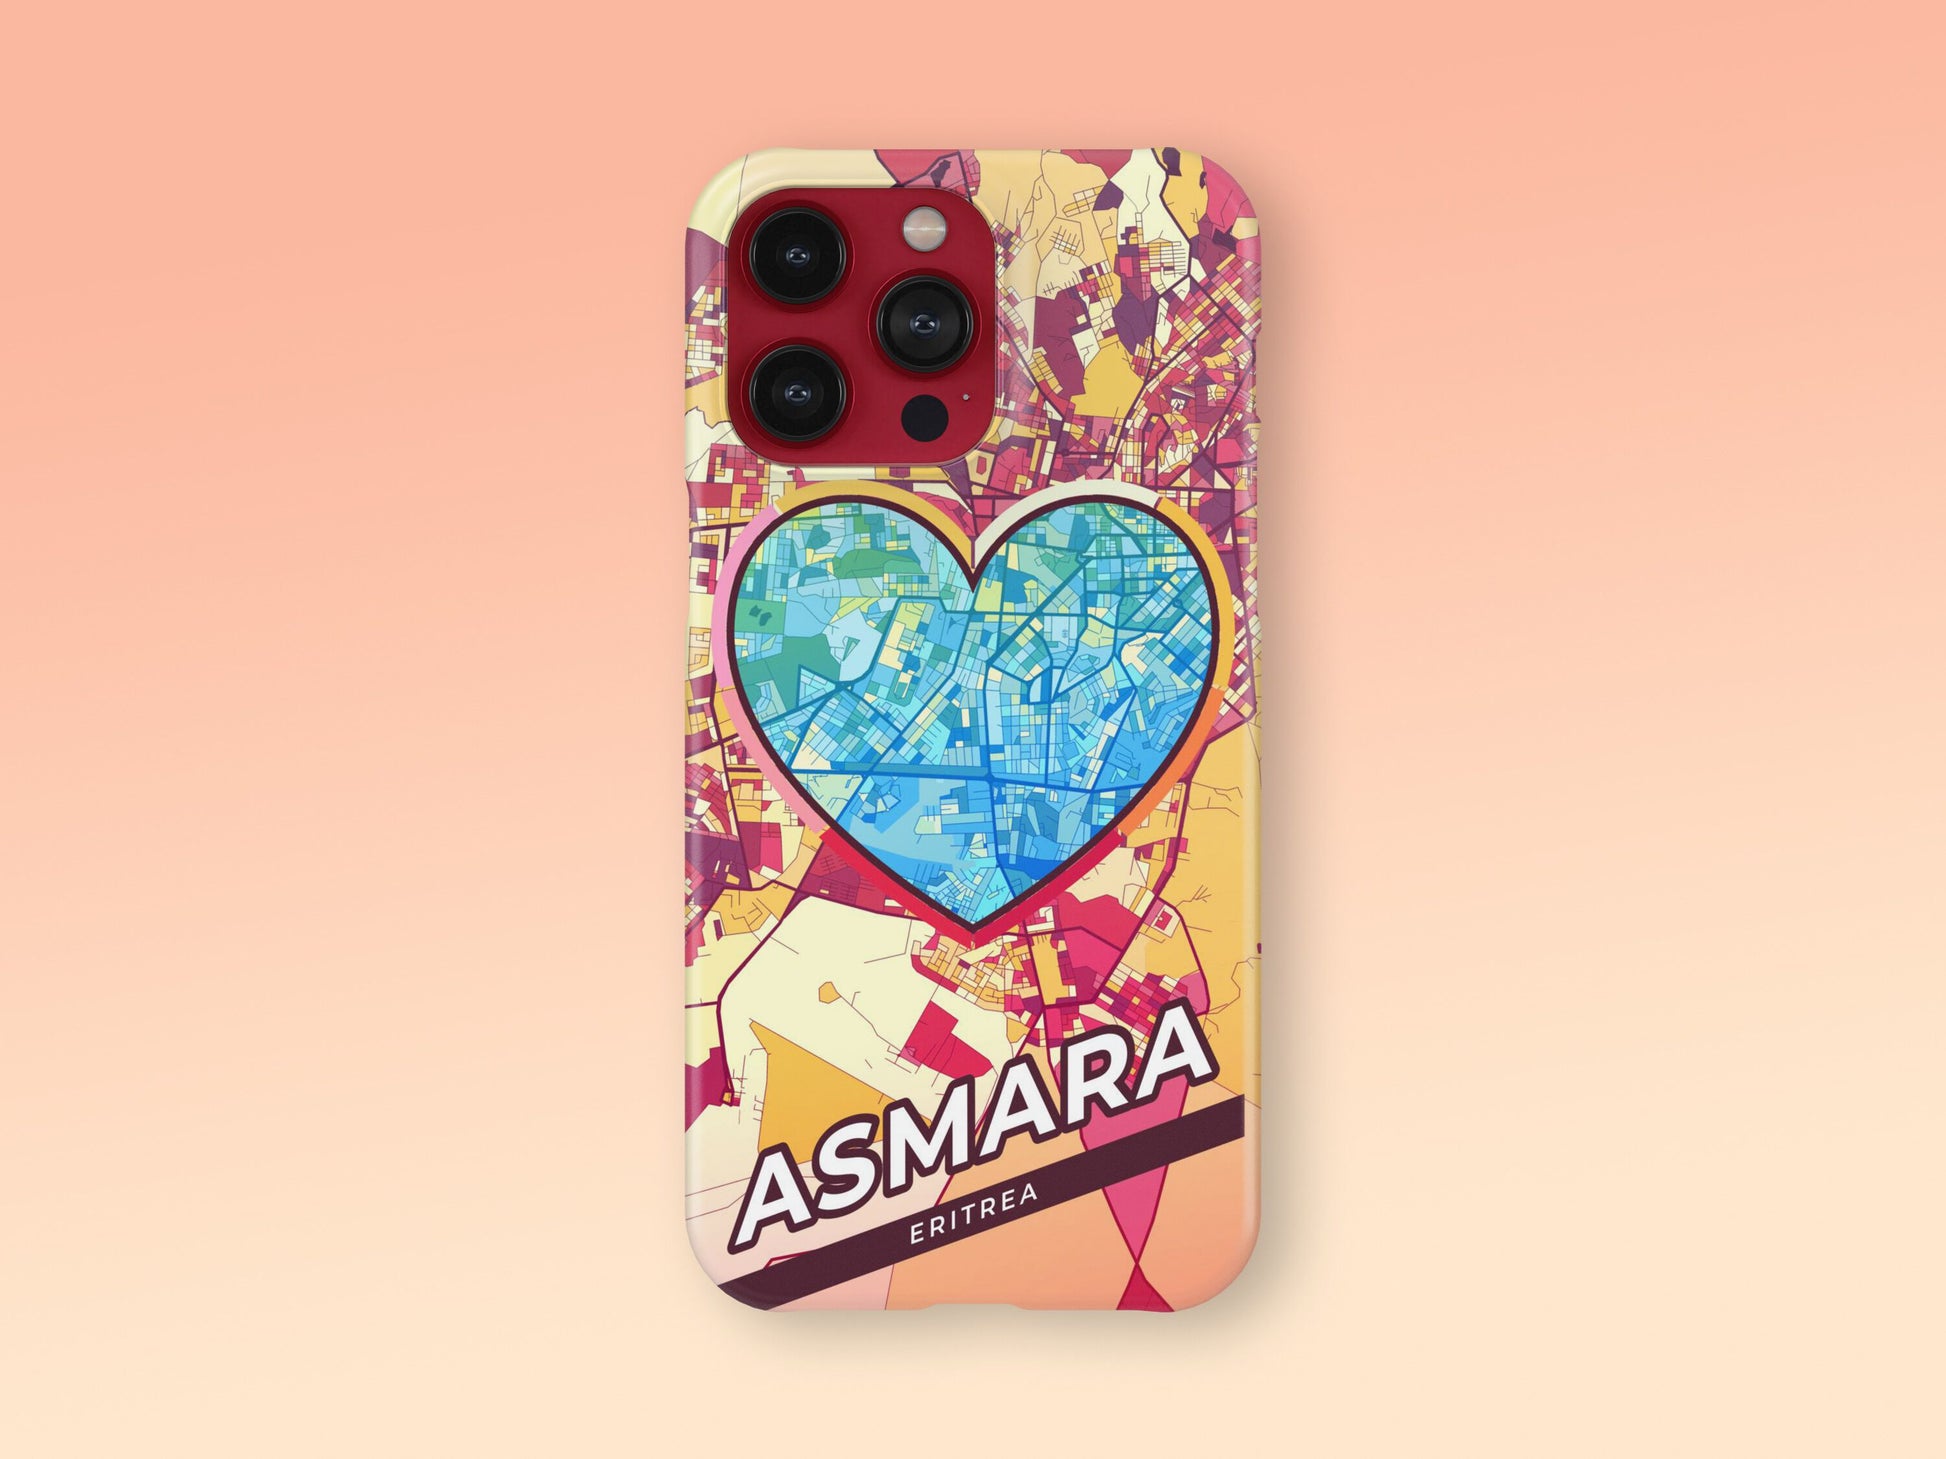 Asmara Eritrea slim phone case with colorful icon. Birthday, wedding or housewarming gift. Couple match cases. 2